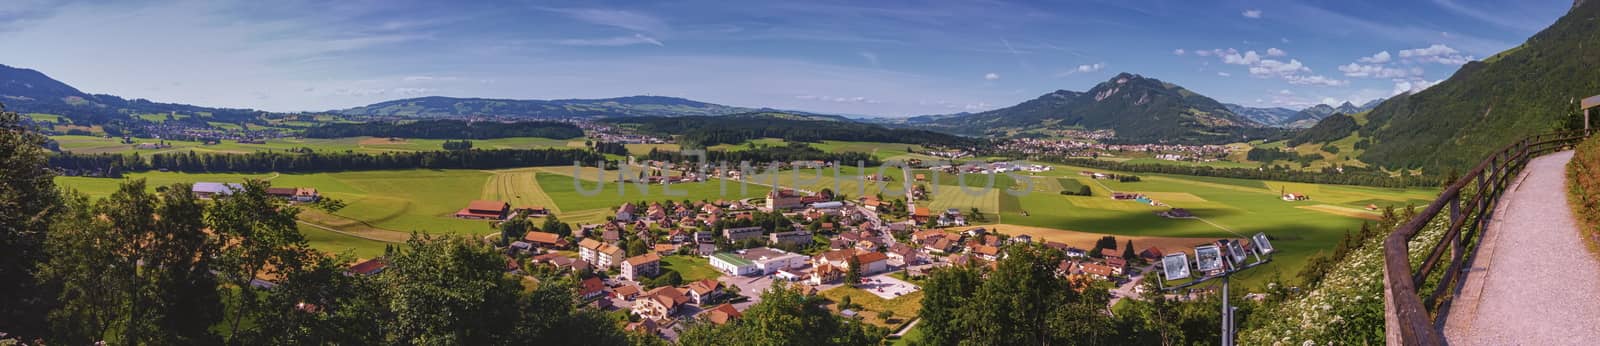 Panoramic view of Gruyeres area, Fribourg, Switzerland by Elenaphotos21